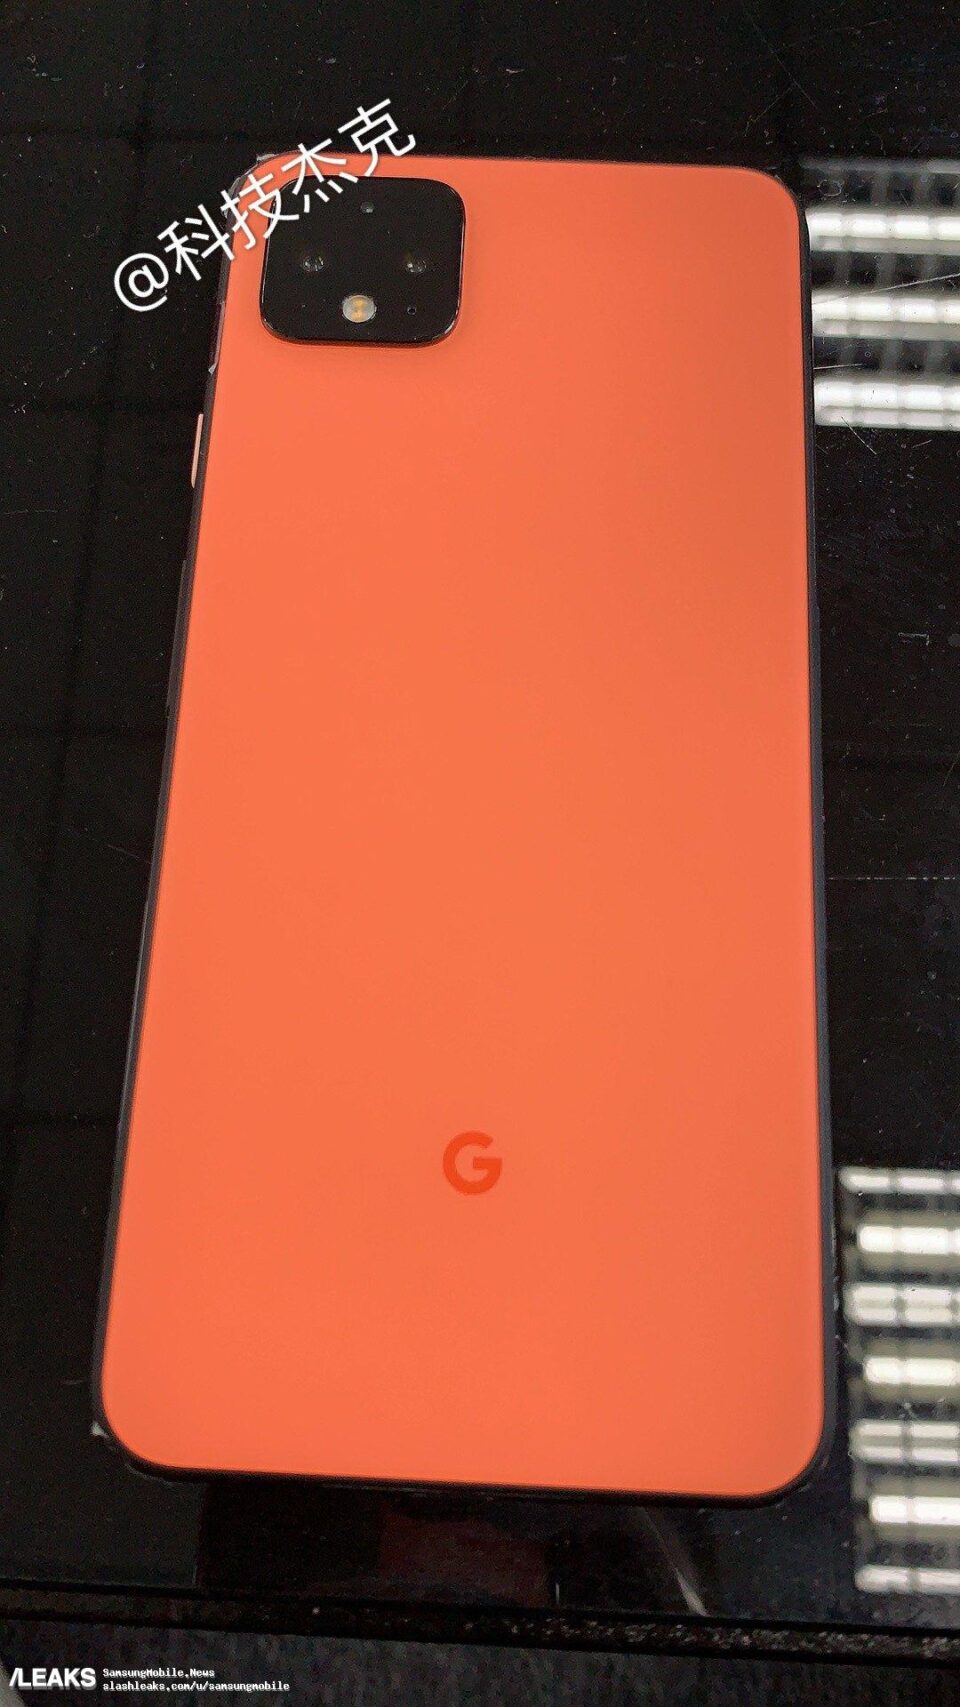 Google Pixel 4 oranye